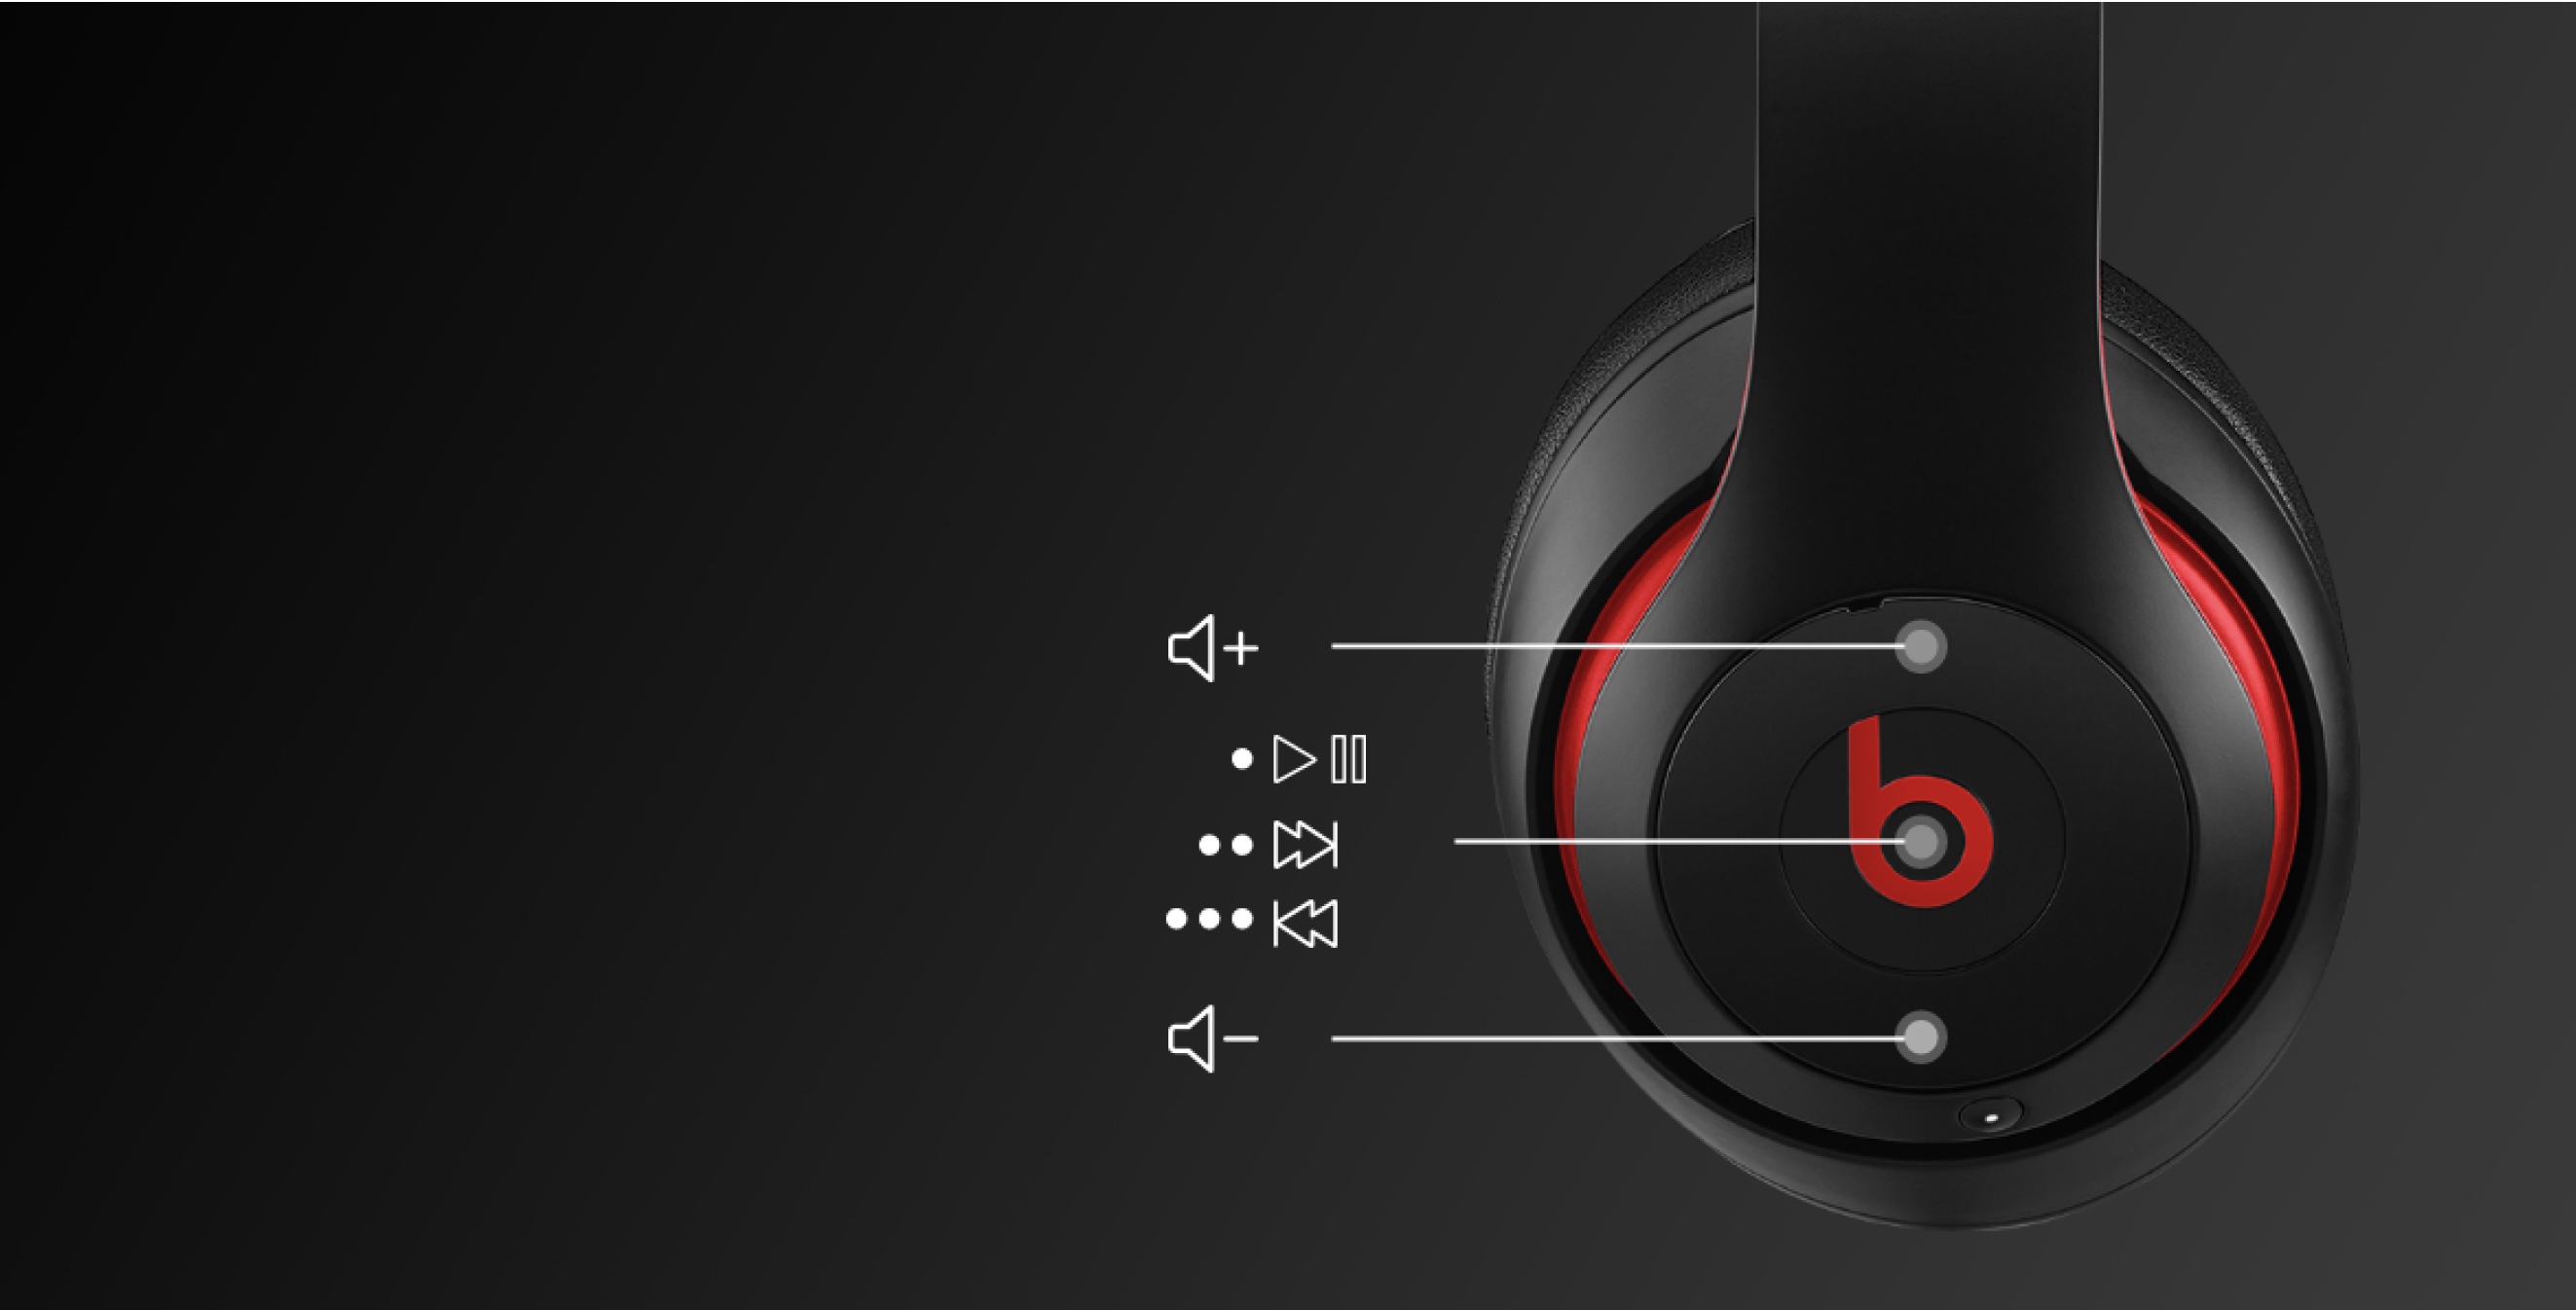 Studio³ Wireless | Noise Cancelling Over-Ear Headphones